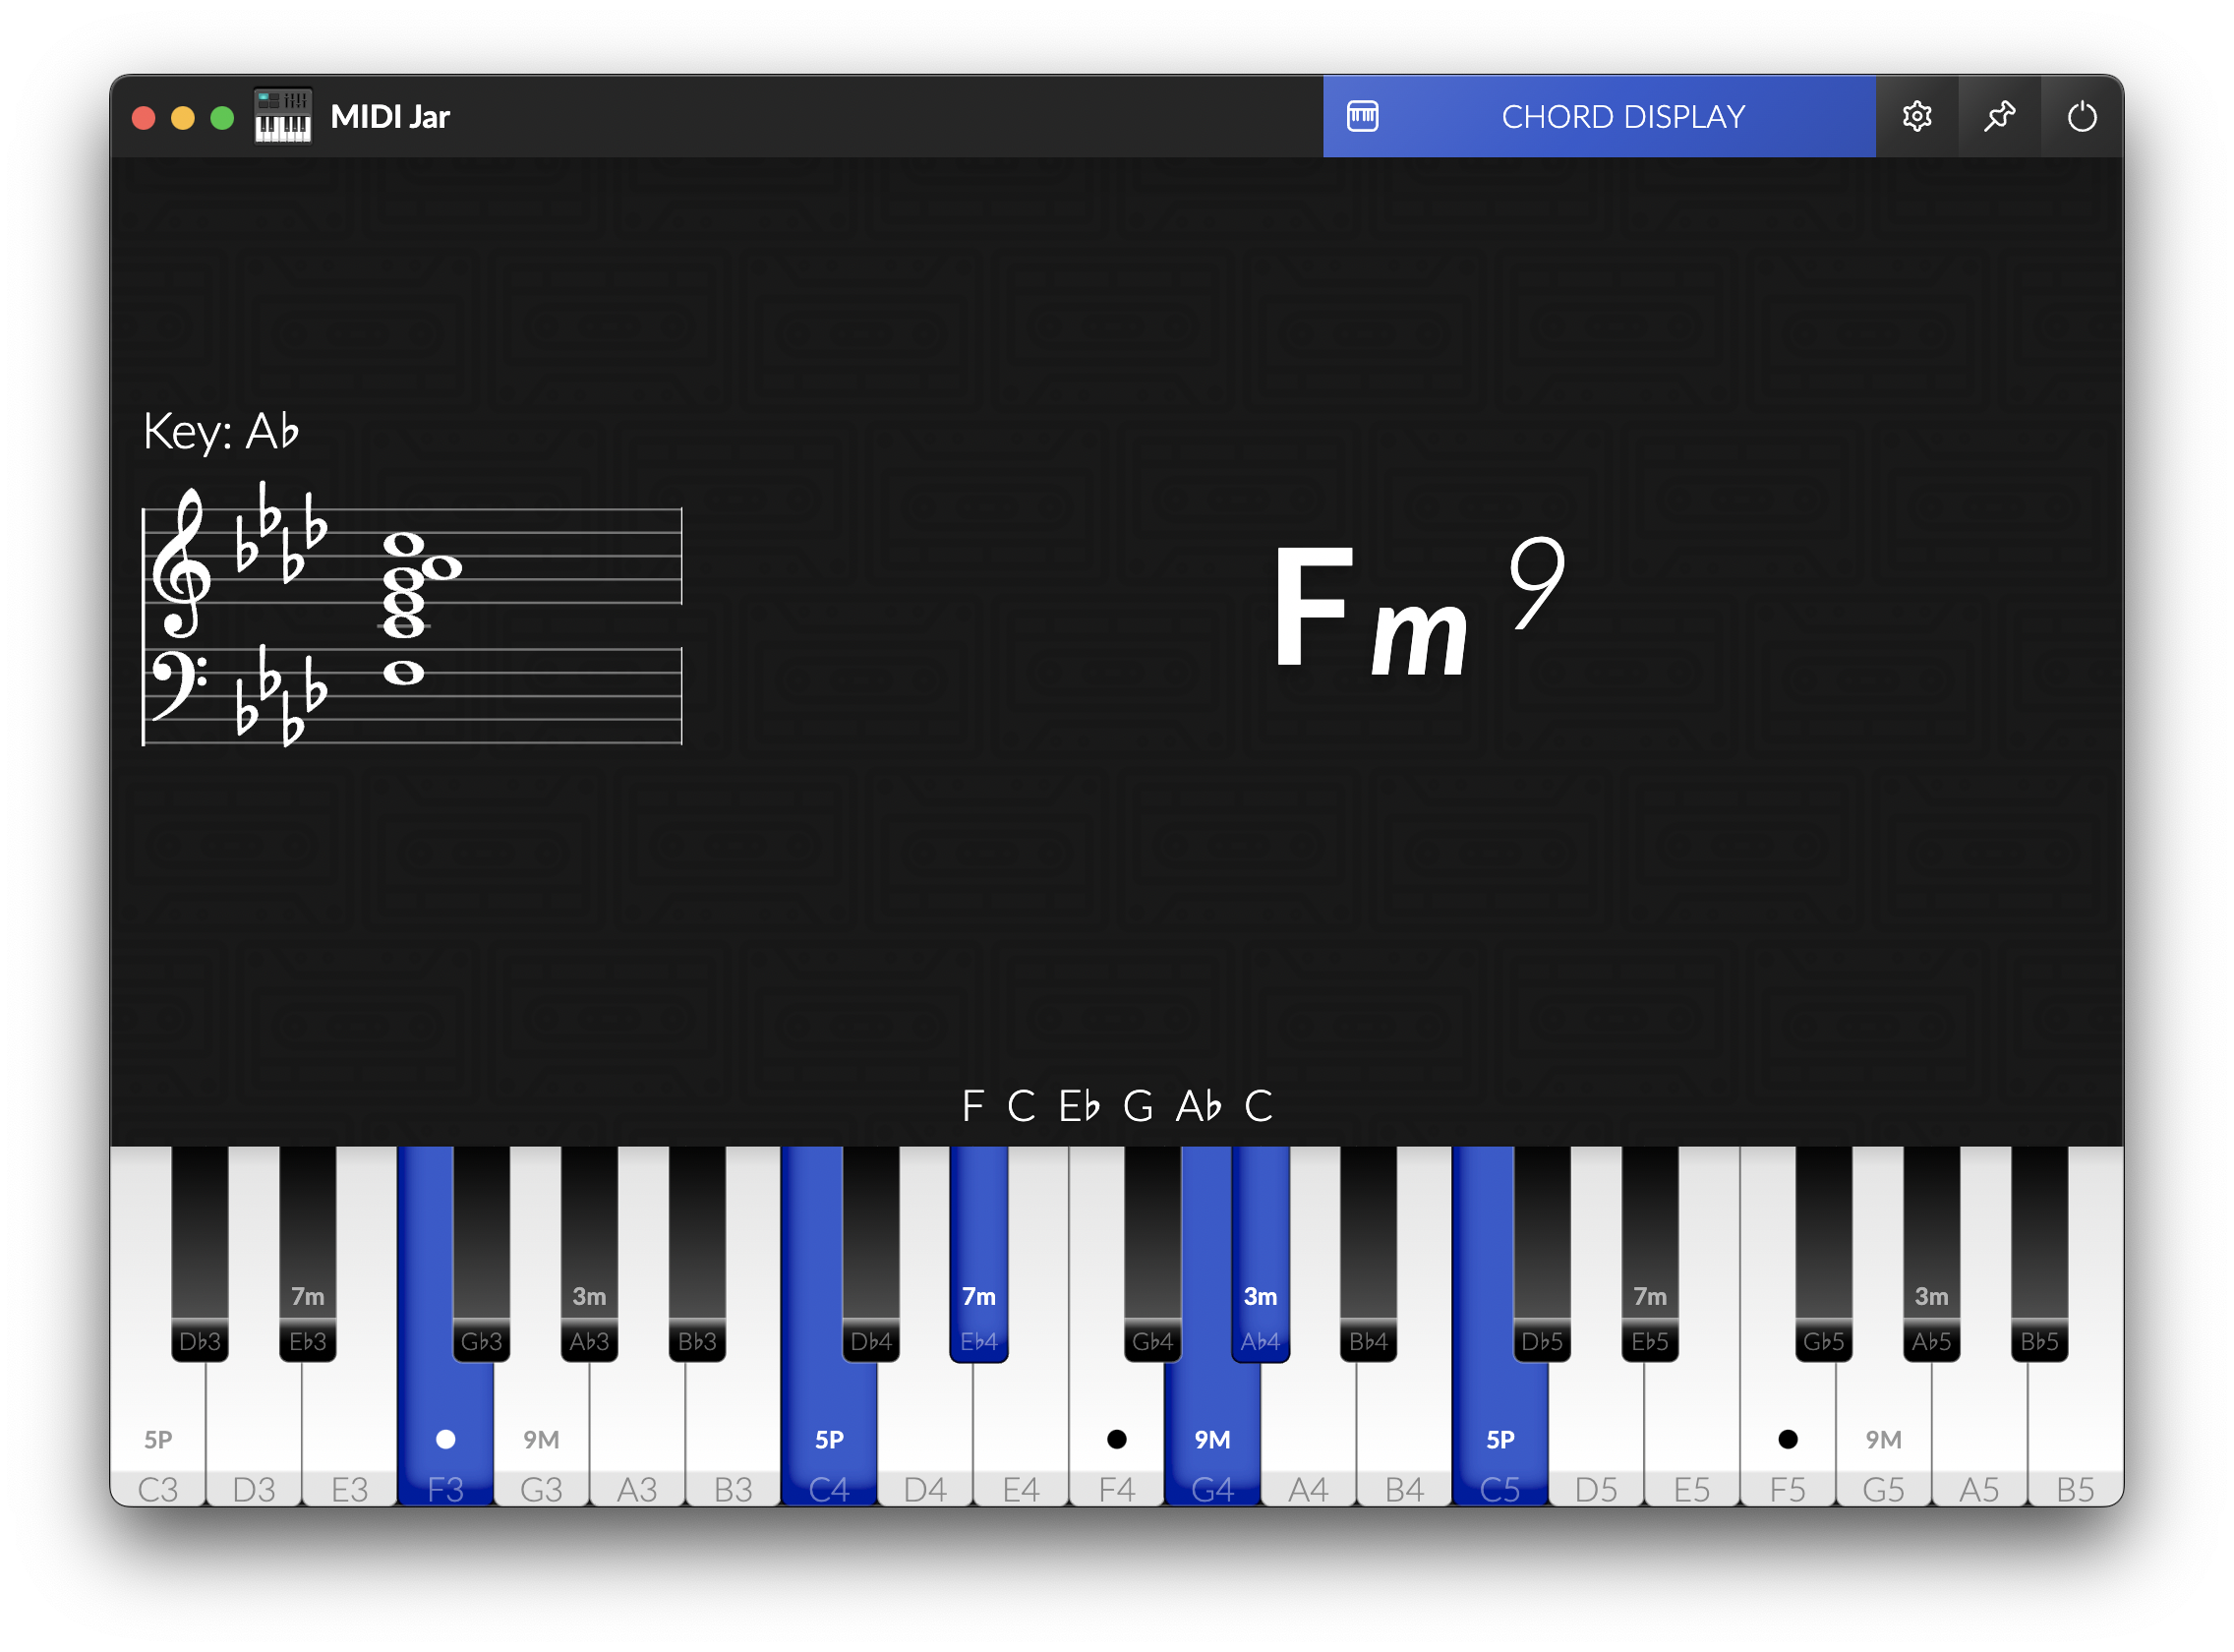 MIDI Jar Chord Display example